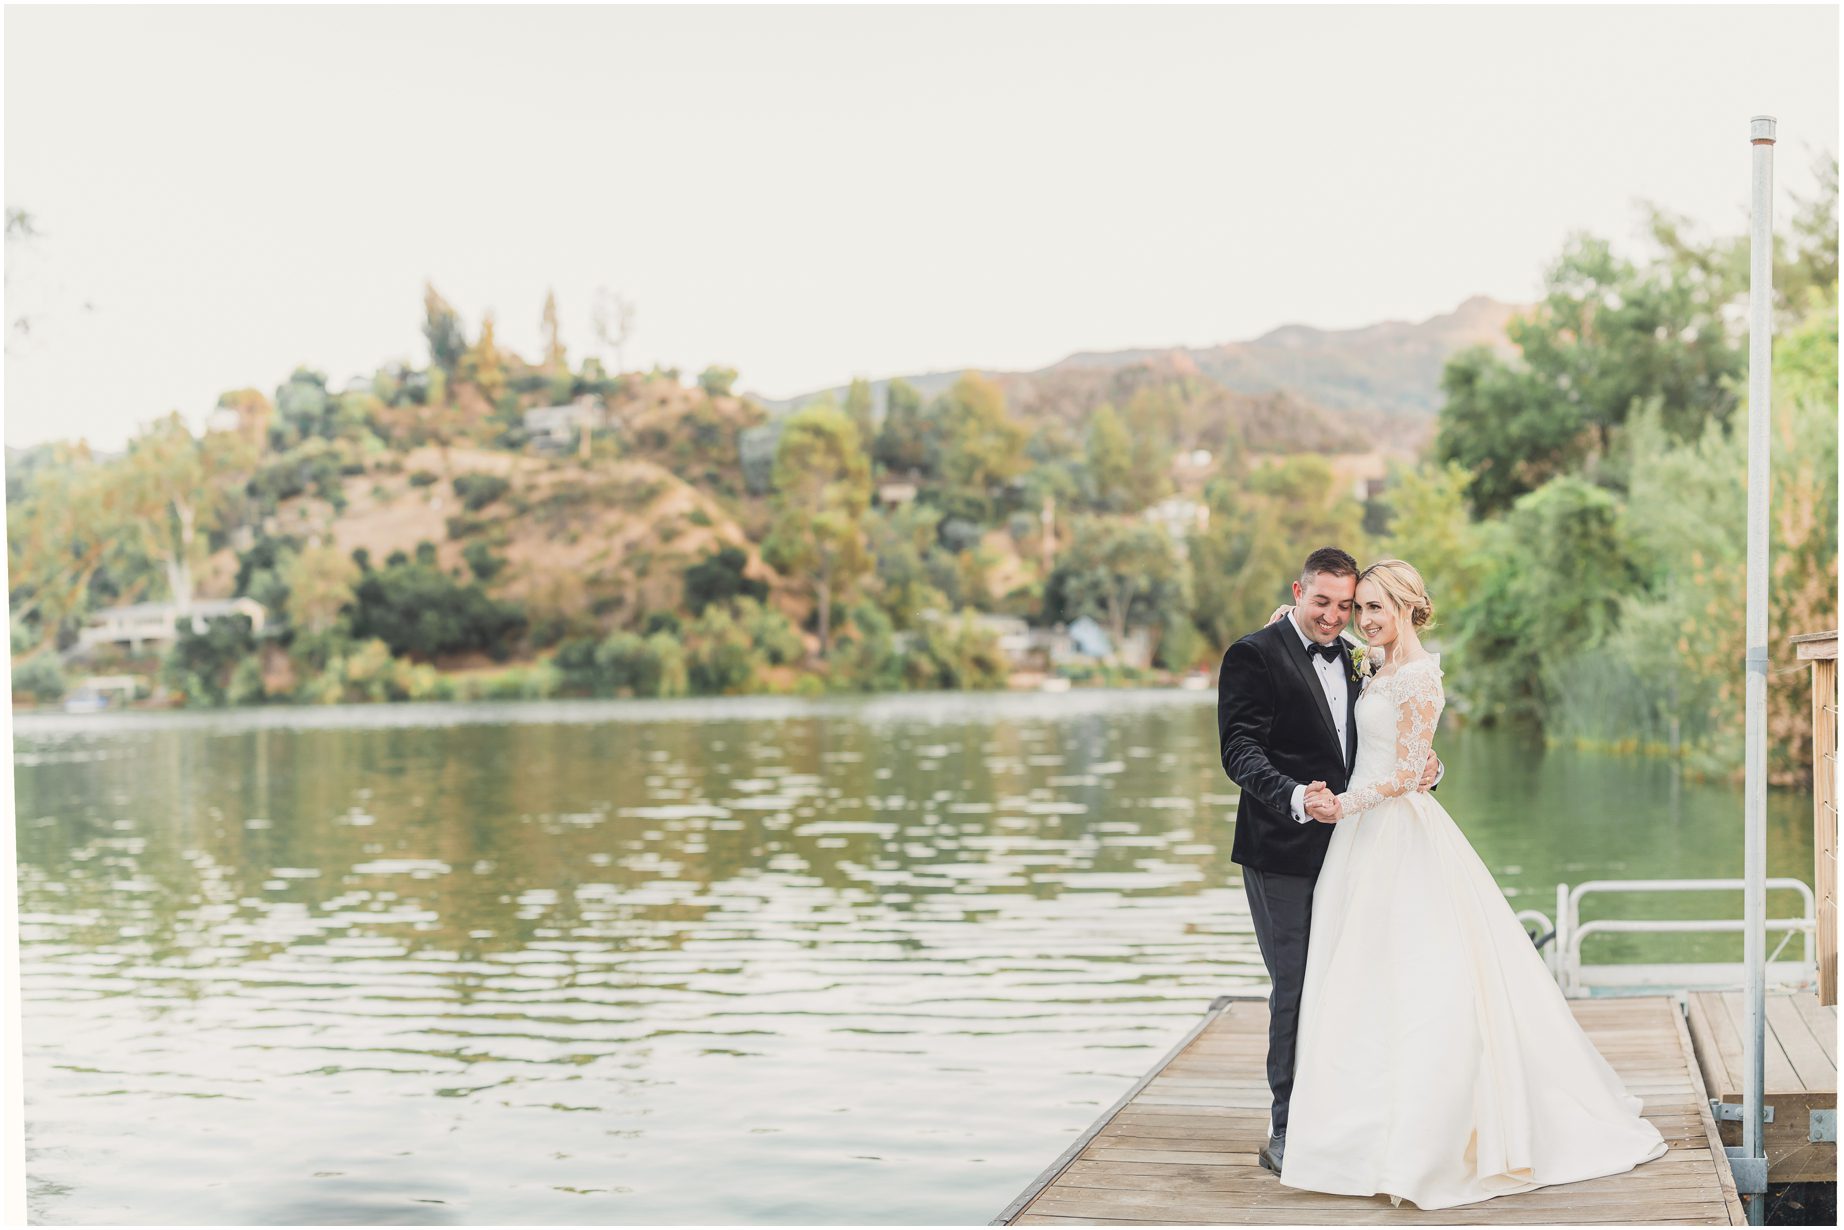 A bride and groom pose near Malibou lake at their wedding, hosted at the Malibou Lake Lodge